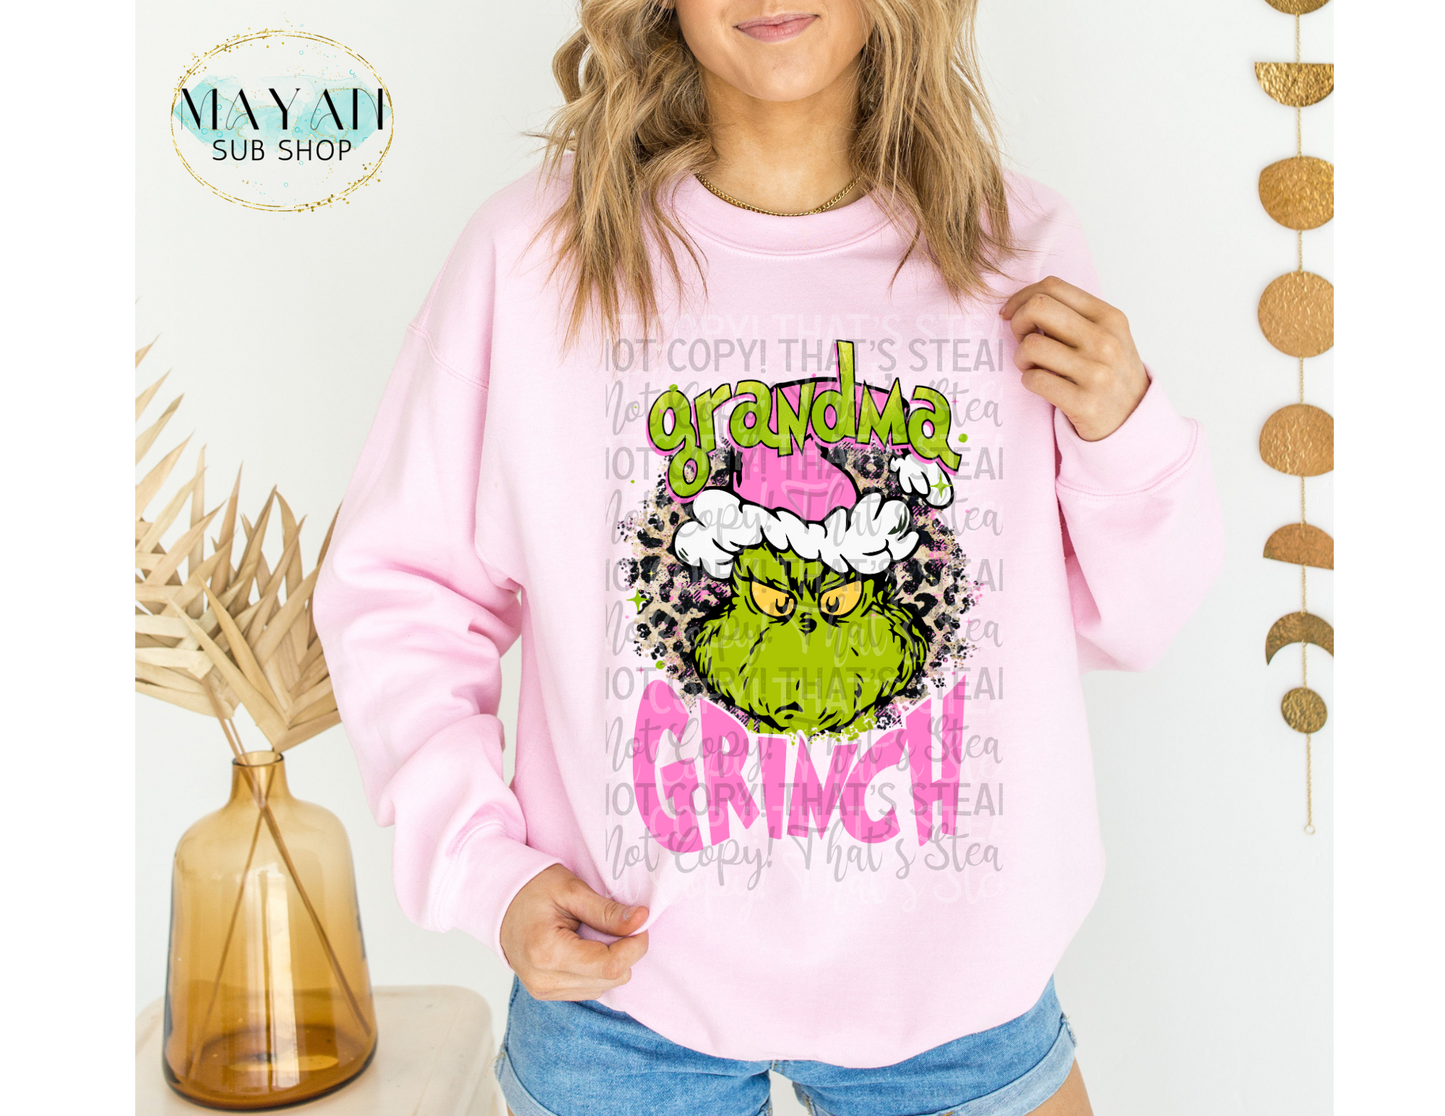 Grandma Mean One Sweatshirt - Mayan Sub Shop